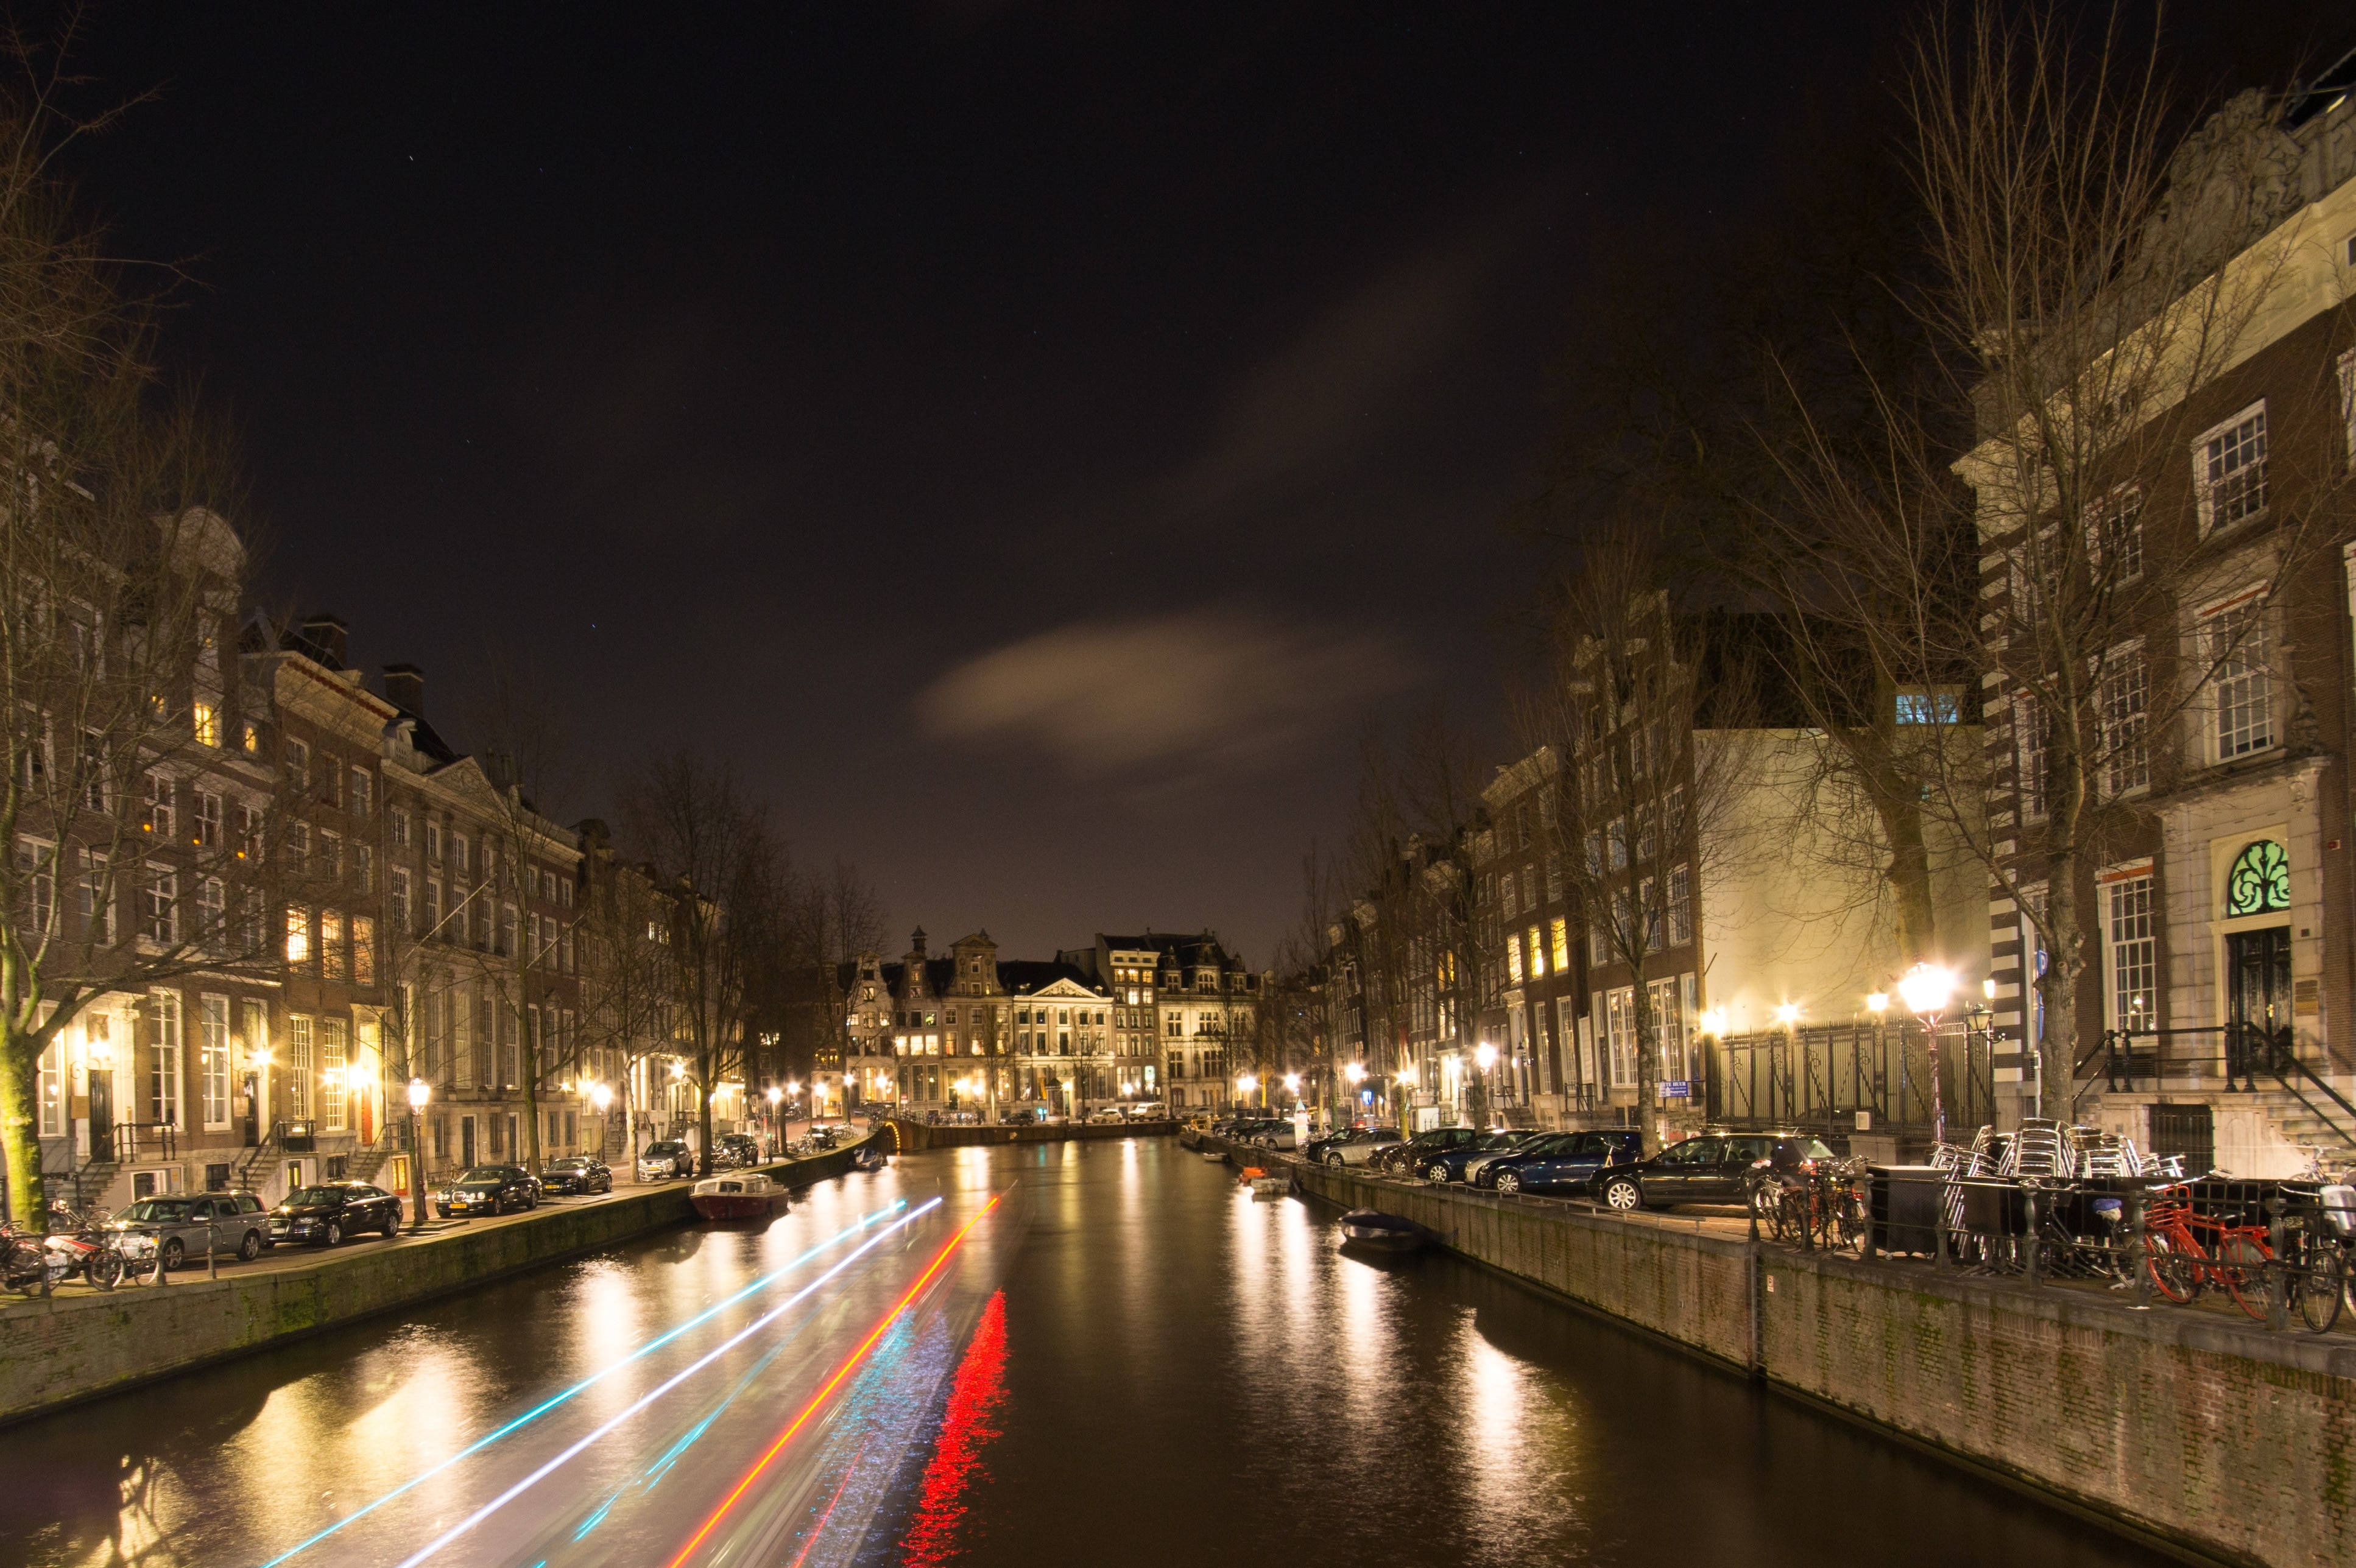 Canal, Amsterdam, Dutch, Boat, Tourism, illuminated, night